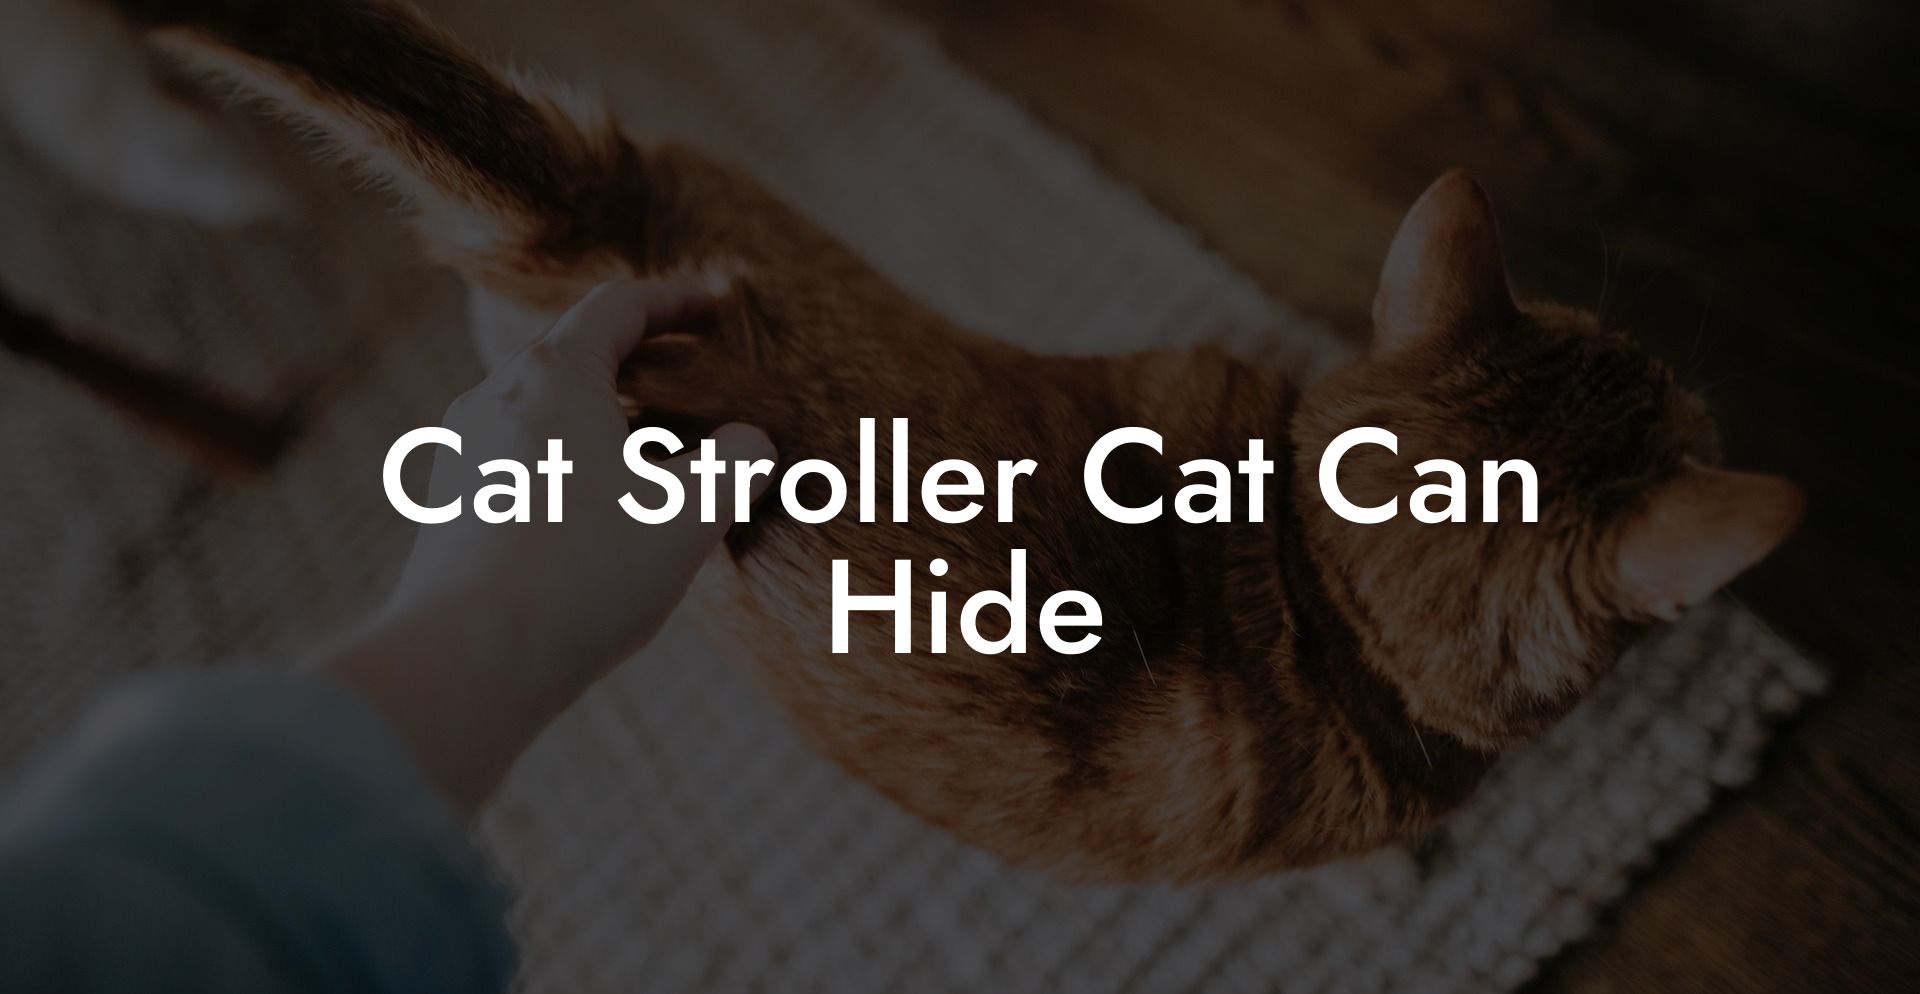 Cat Stroller Cat Can Hide